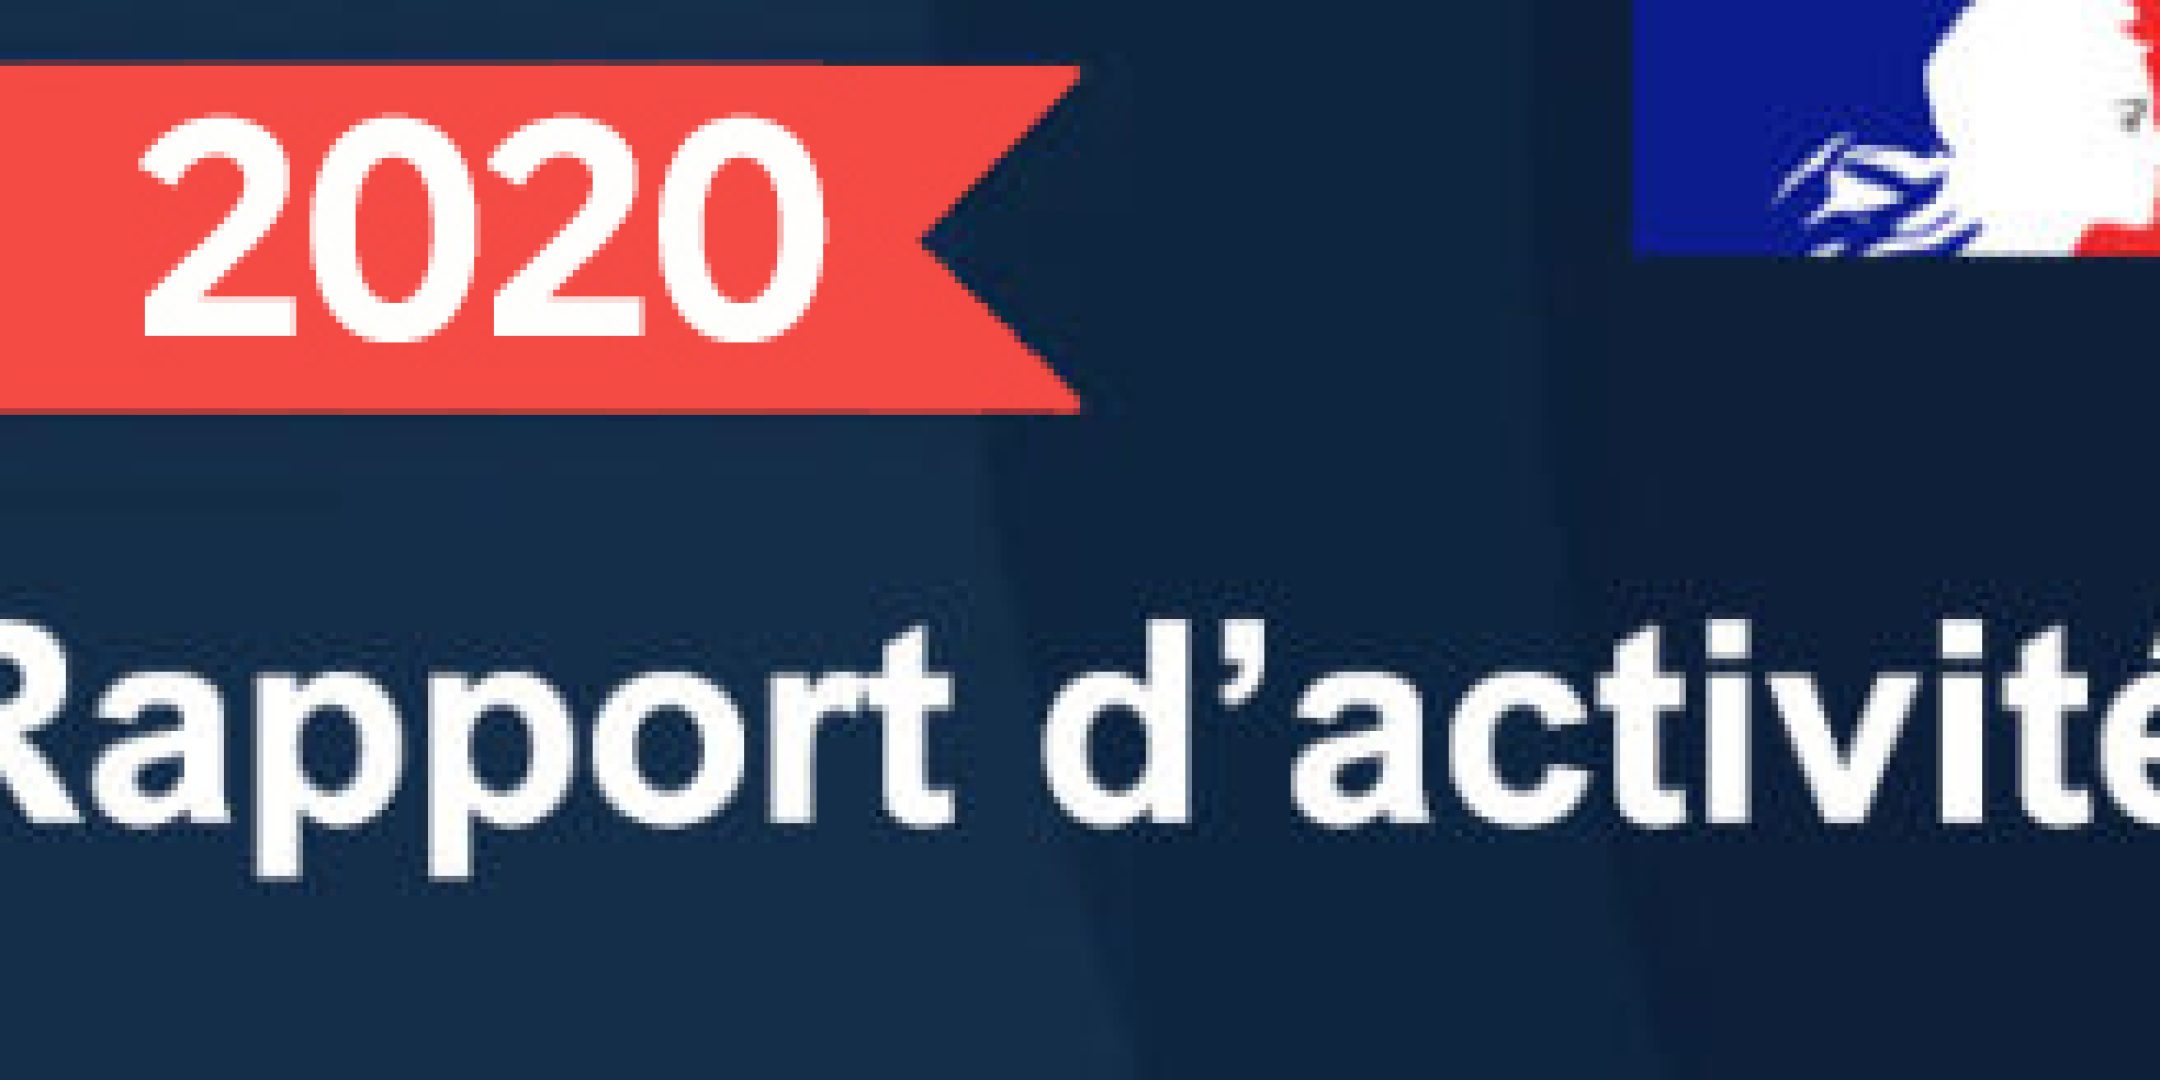 Rapport-activites2020